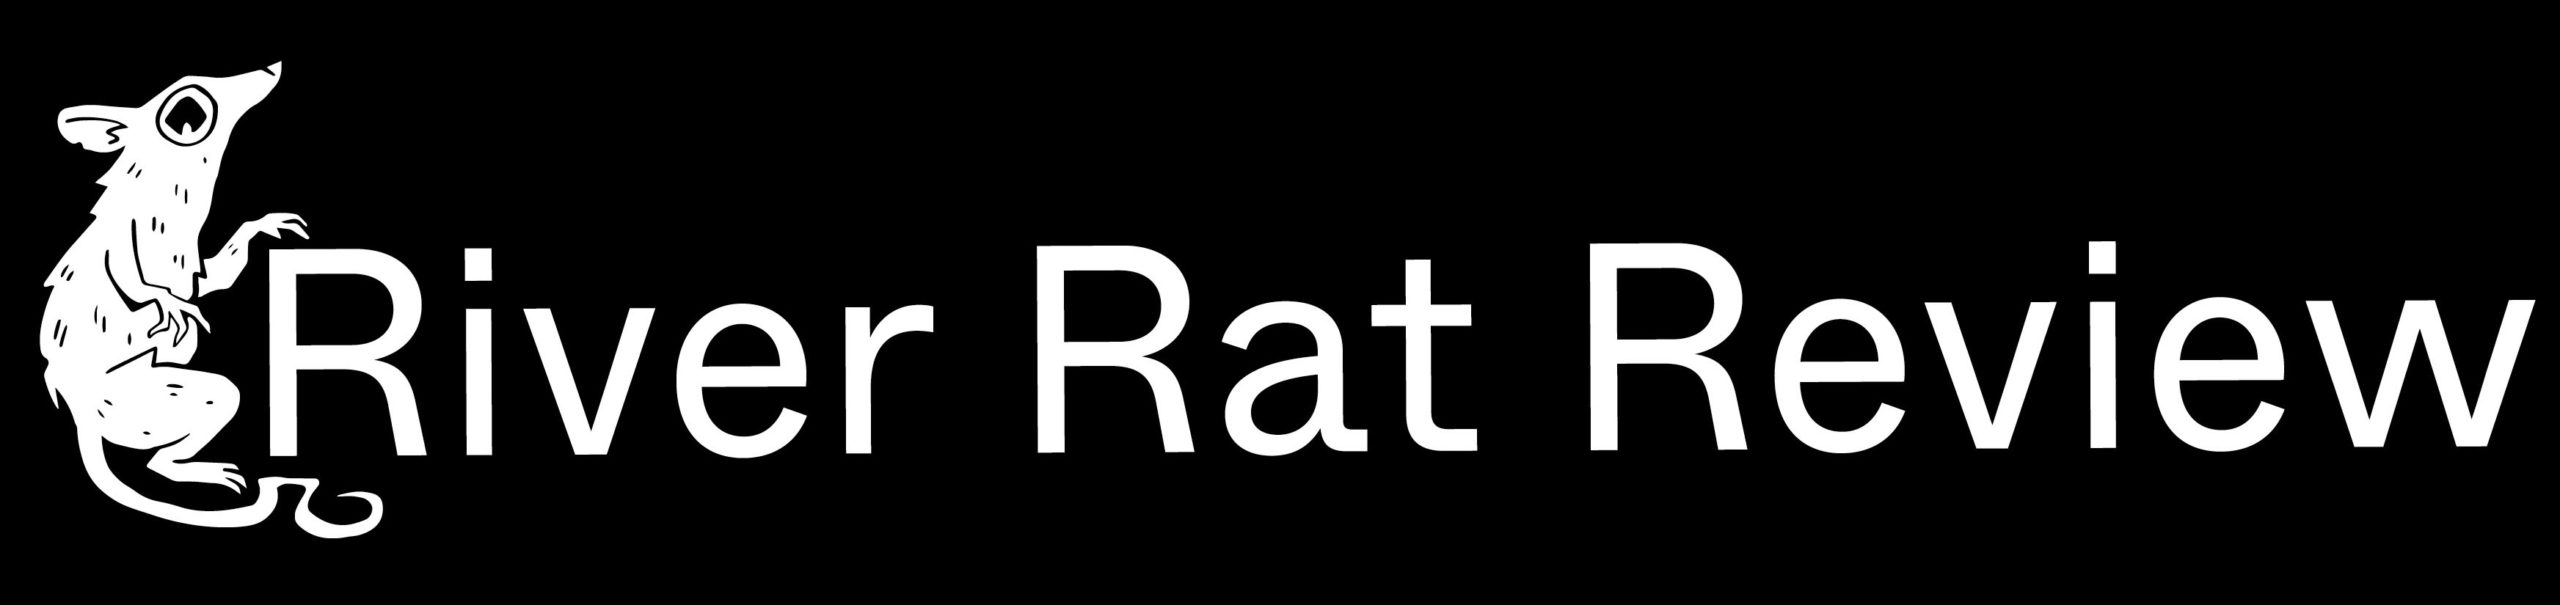 River Rat Review